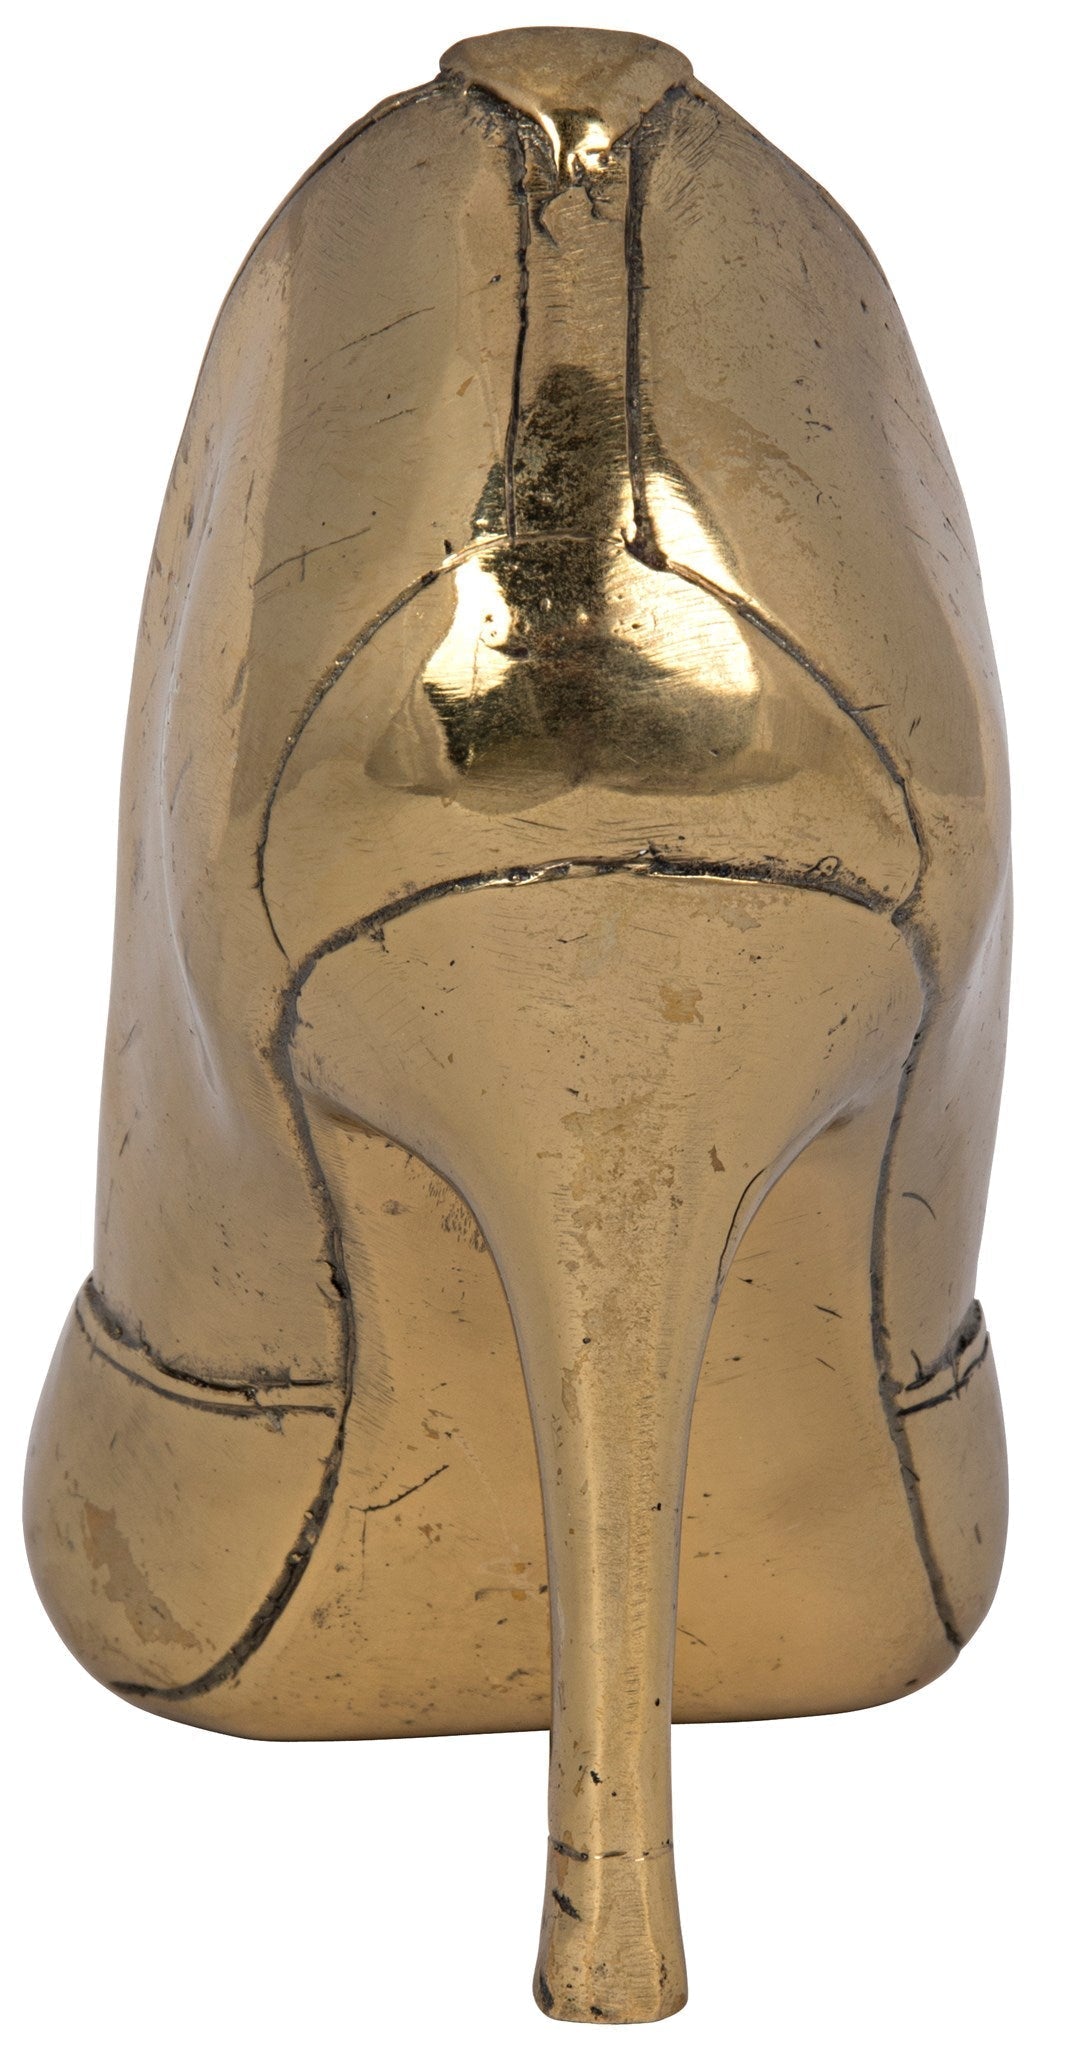 Heel, Brass - Decor - Tipplergoods